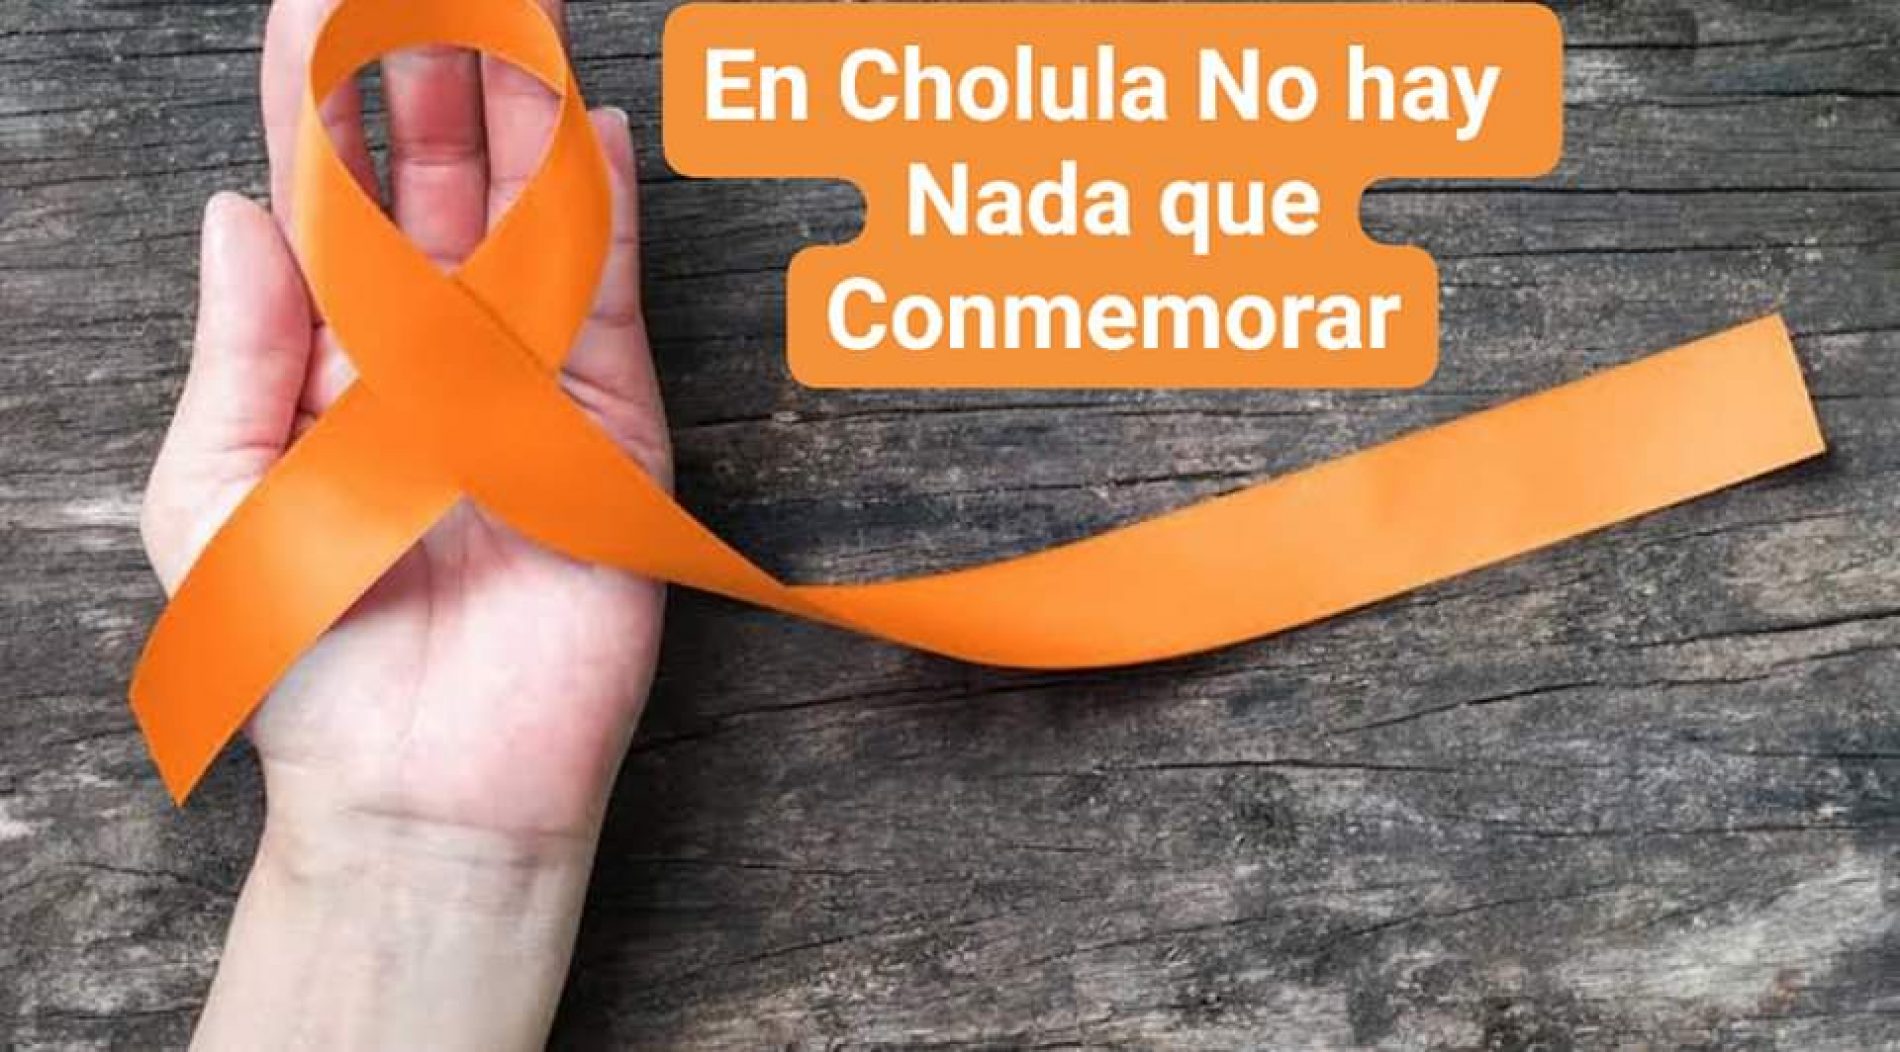 FEMINICIDIOS EN CHOLULA